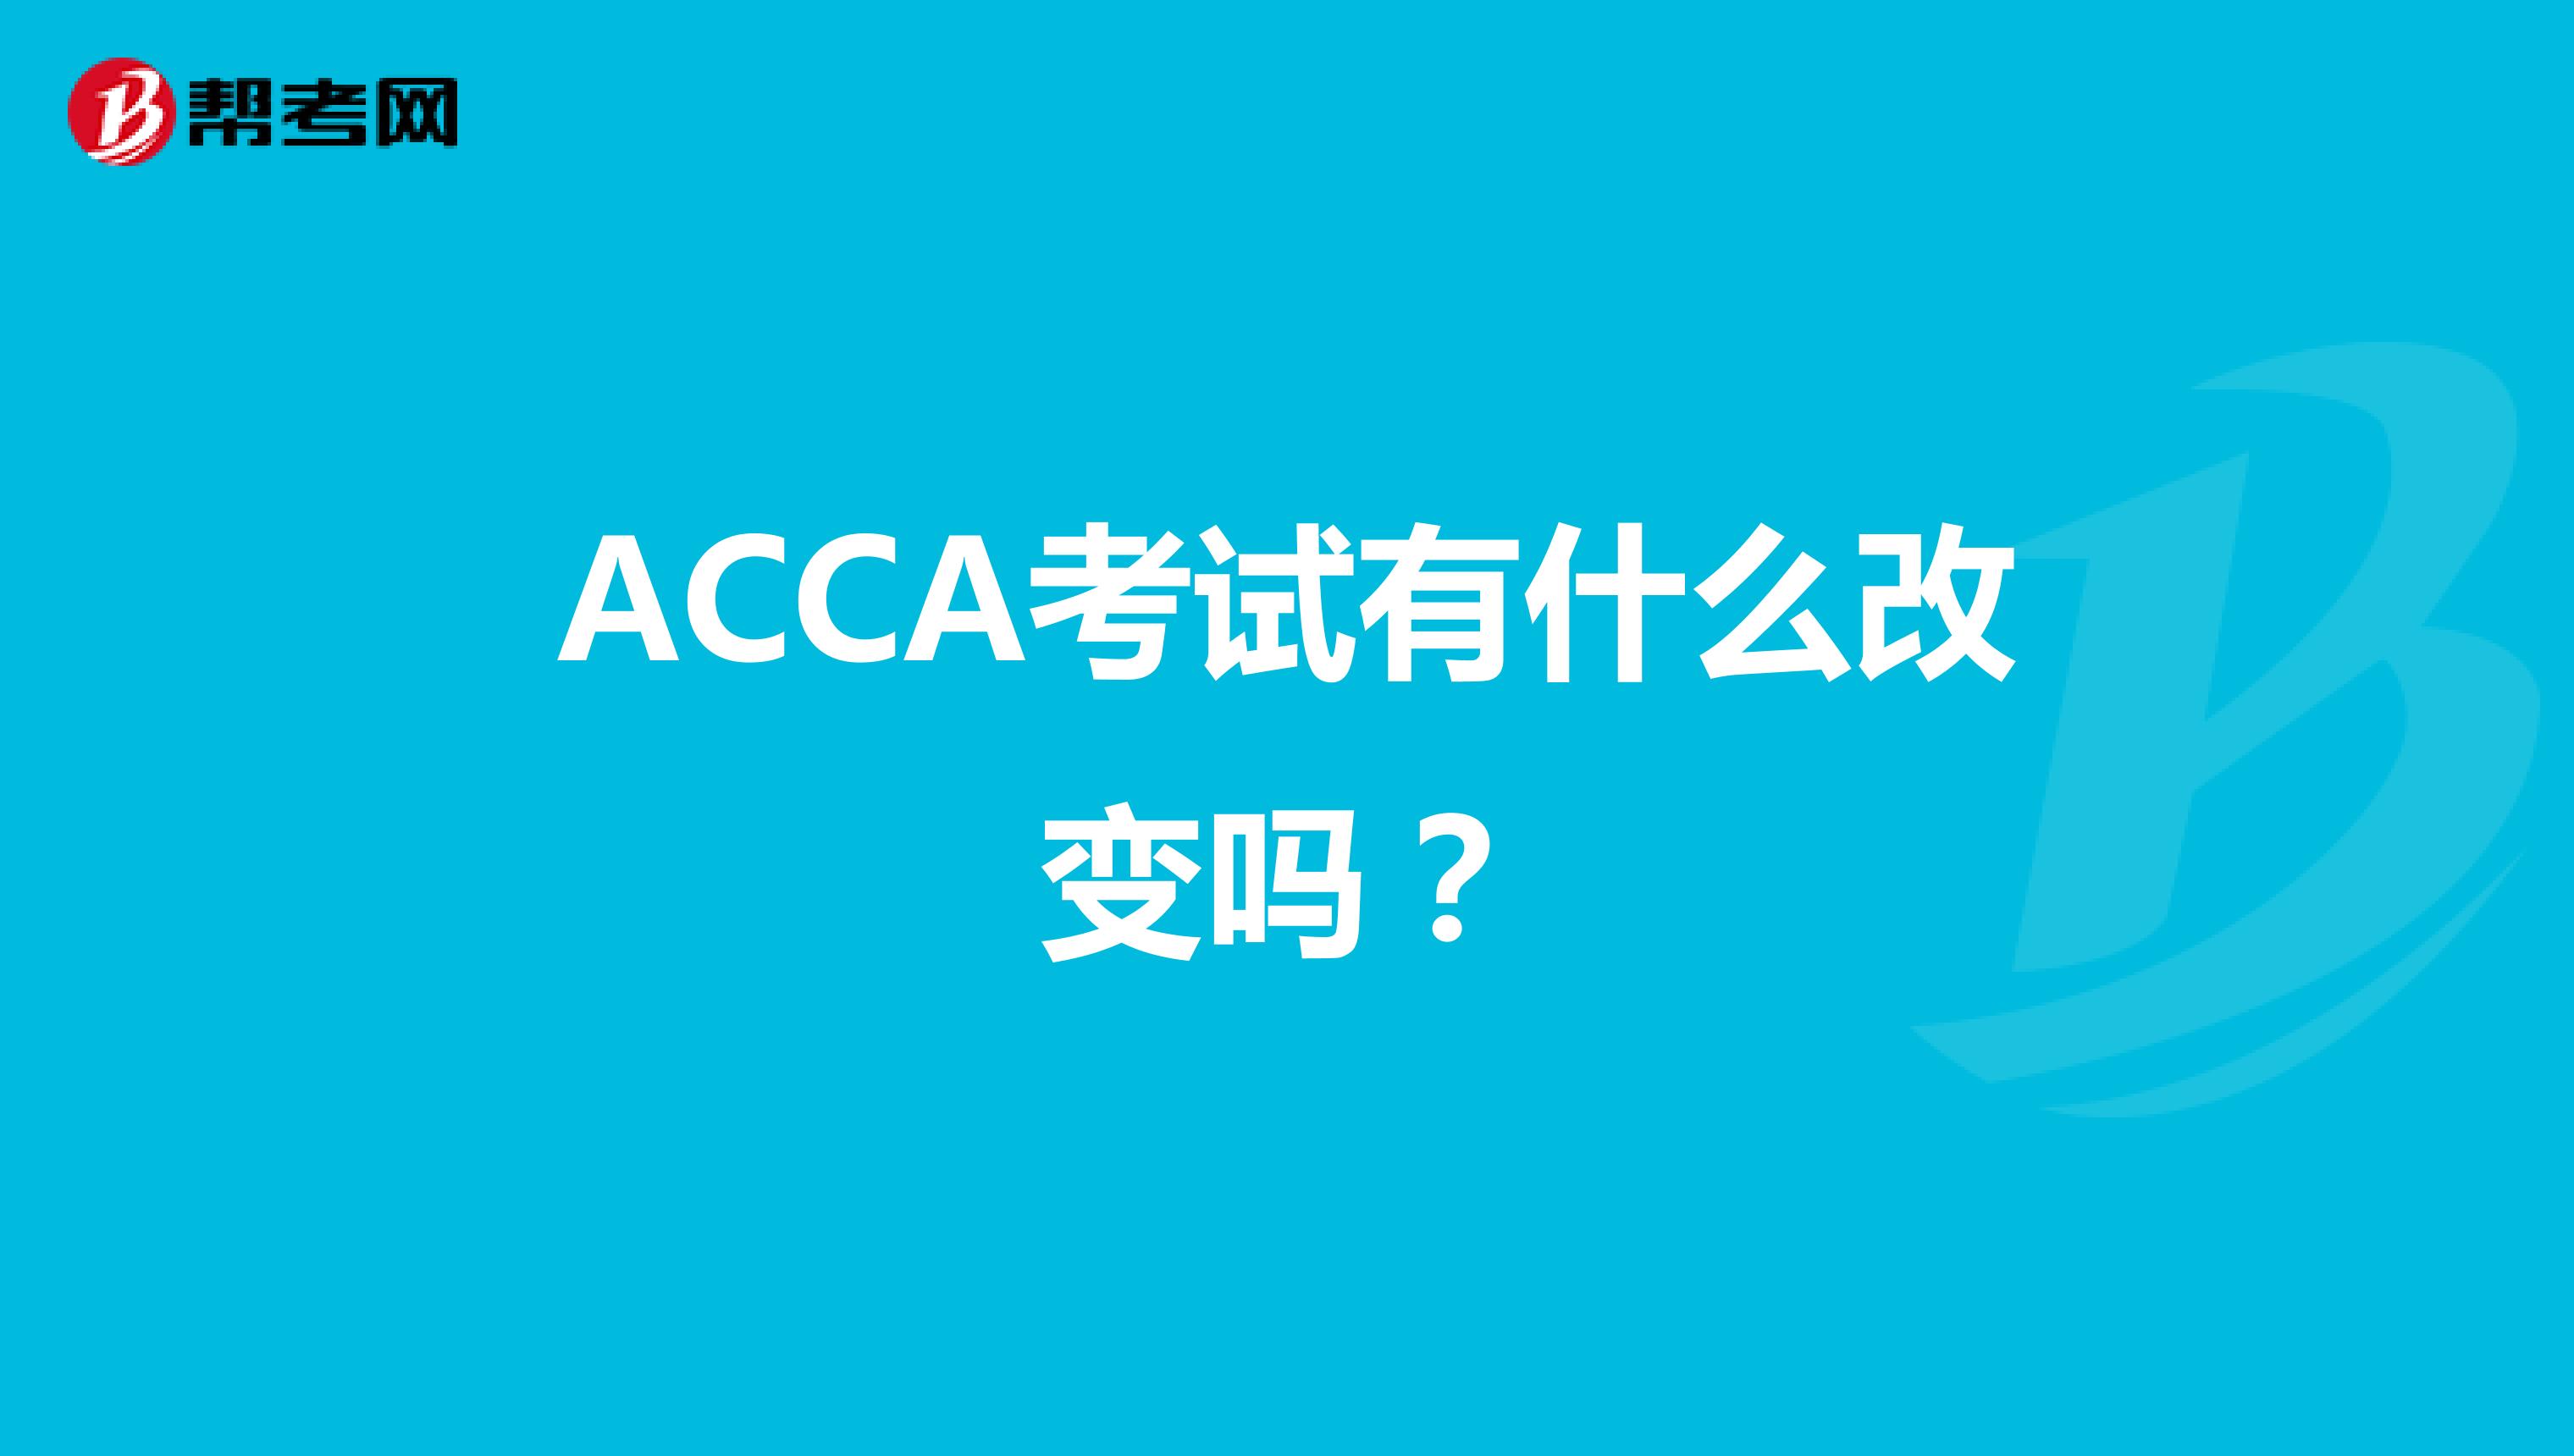 ACCA考试有什么改变吗？